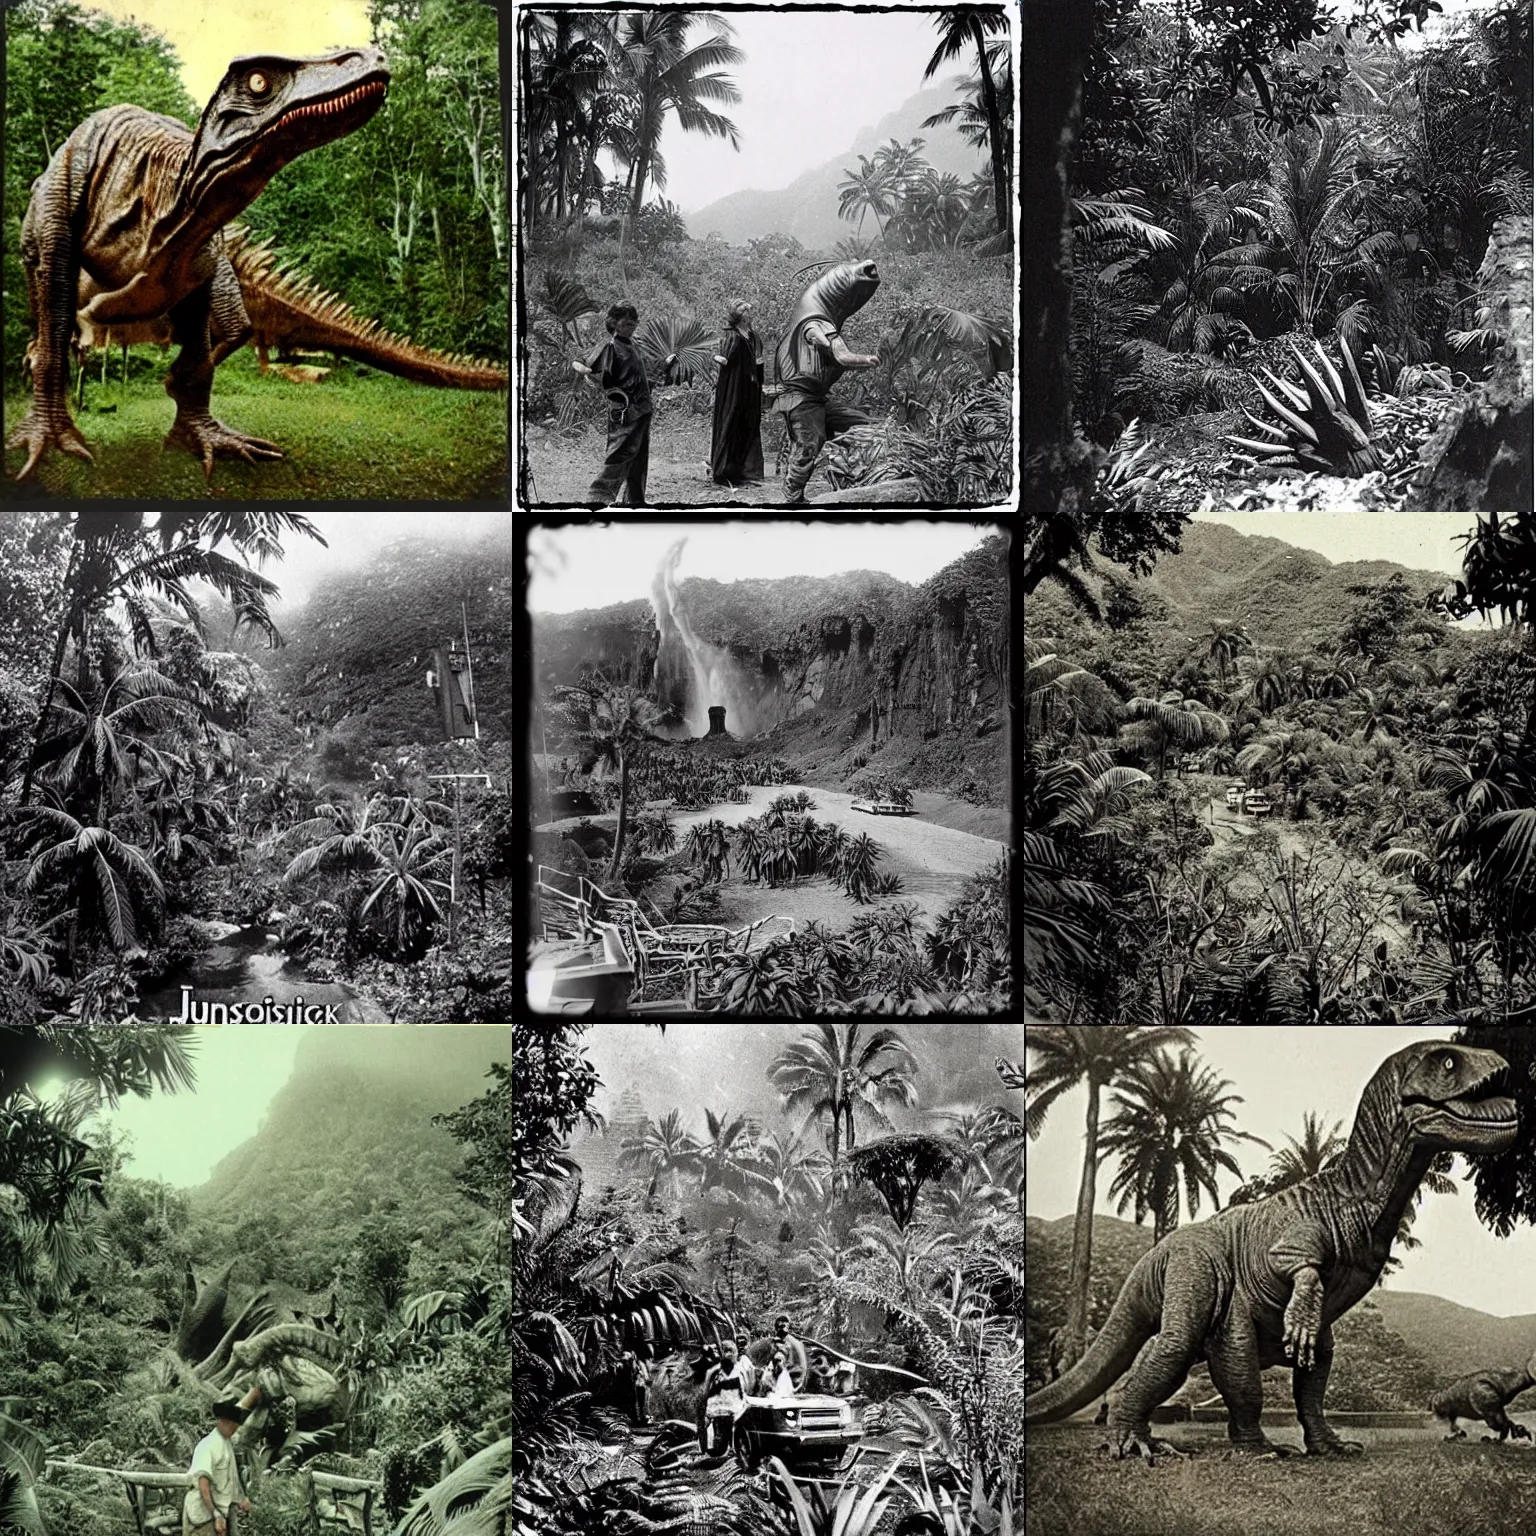 Prompt: “Jurassic park, 1900’s photo”